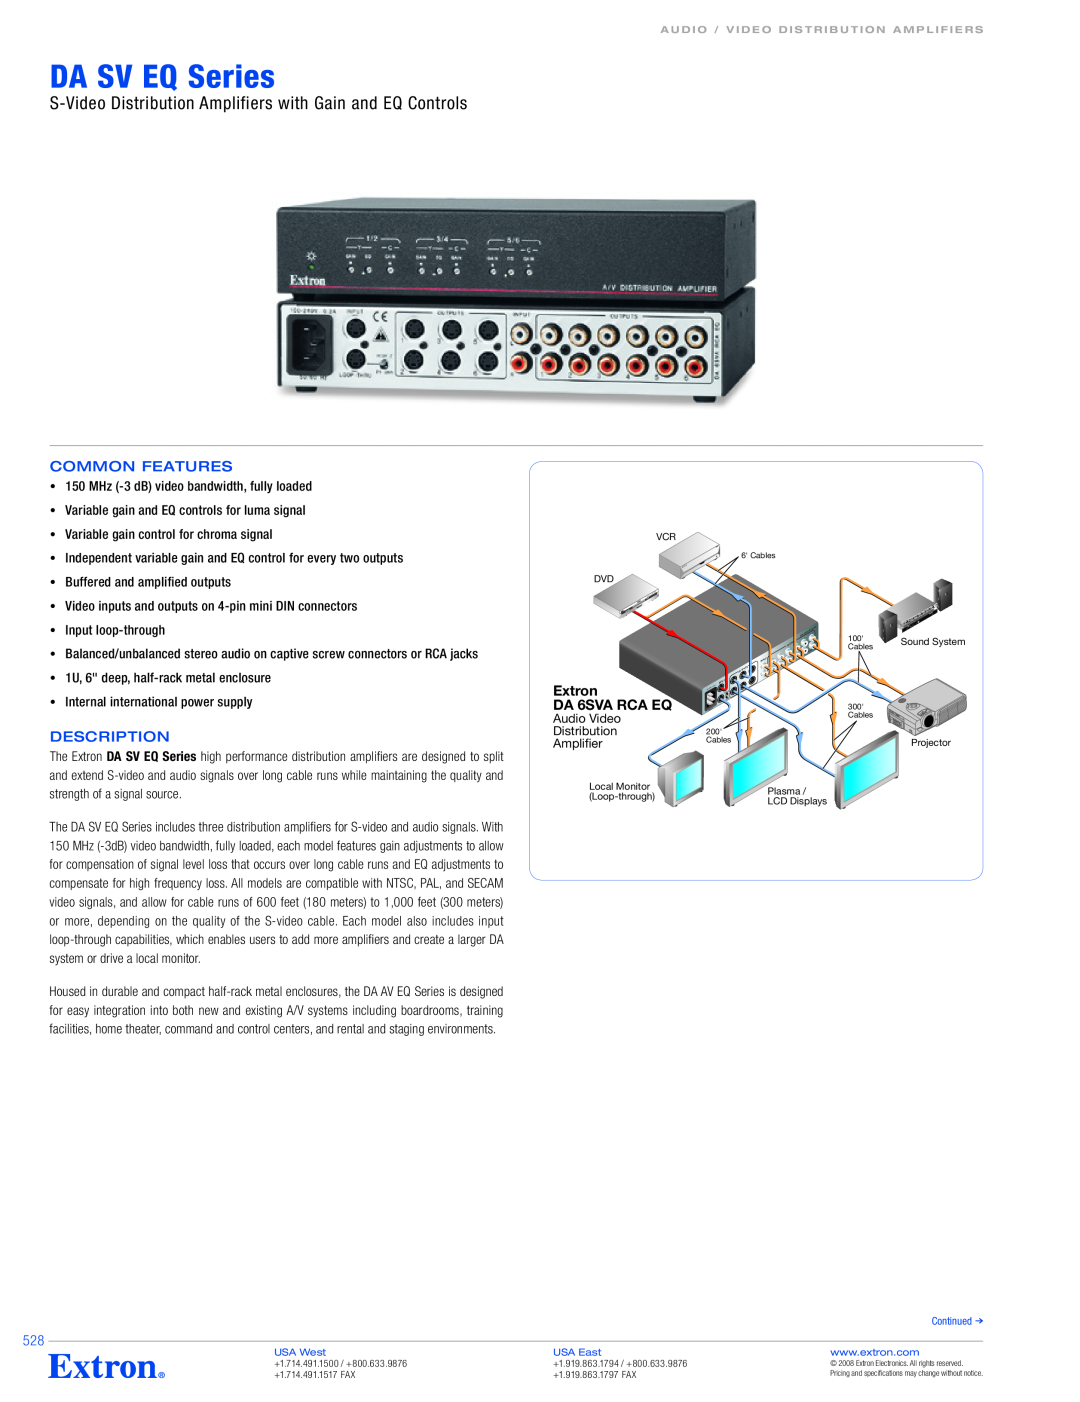 Extron electronic DA SV EQ Series specifications Common Features, Description, Extron DA 6SVA RCA EQ, Input loop-through 